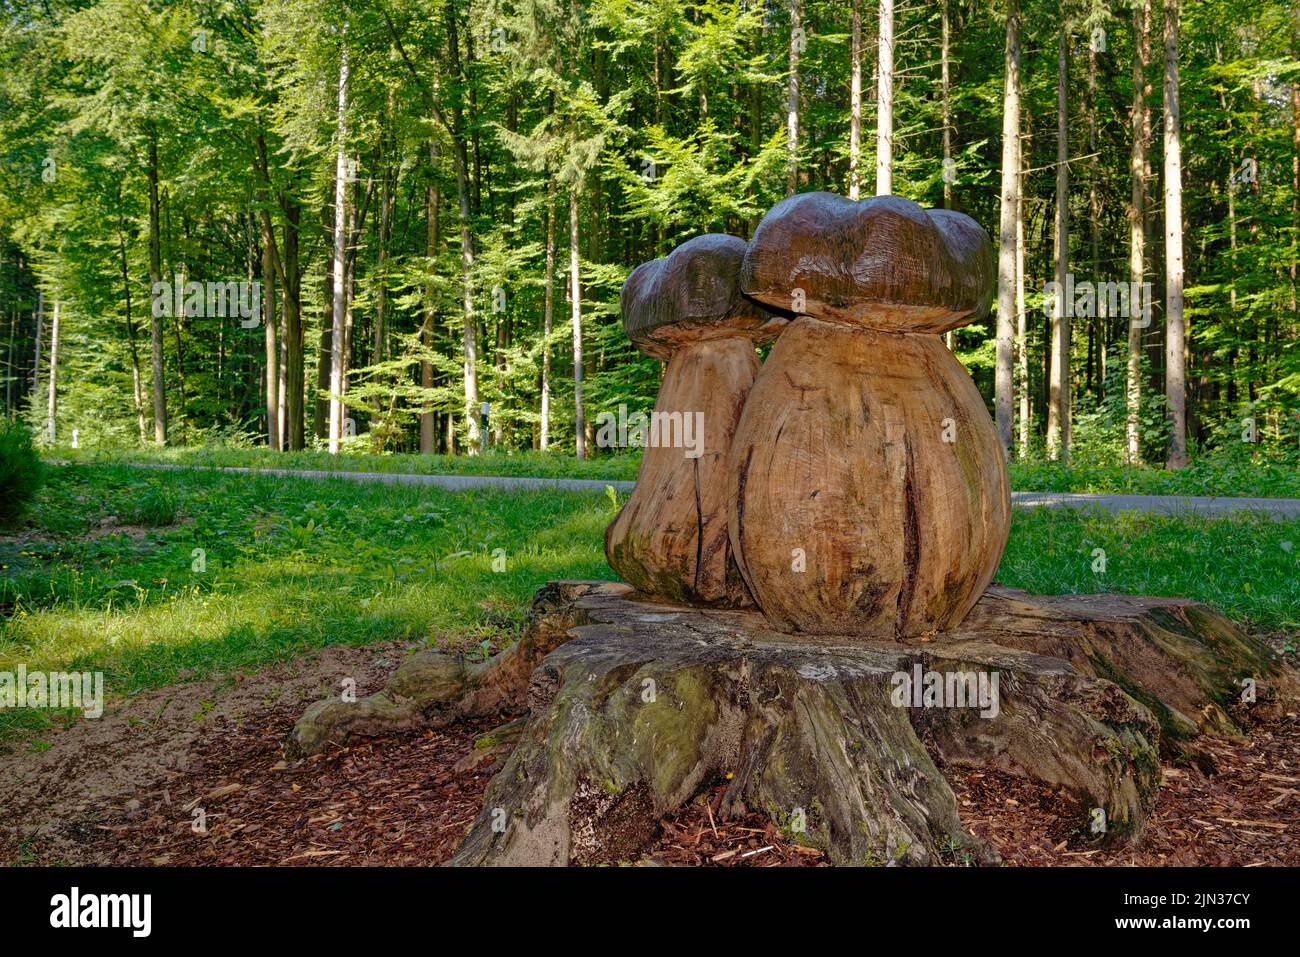 extraordinary porcini mushrooms from bavaria - Erlesene Steinpilze aus Bayern - not suitable for eating Stock Photo